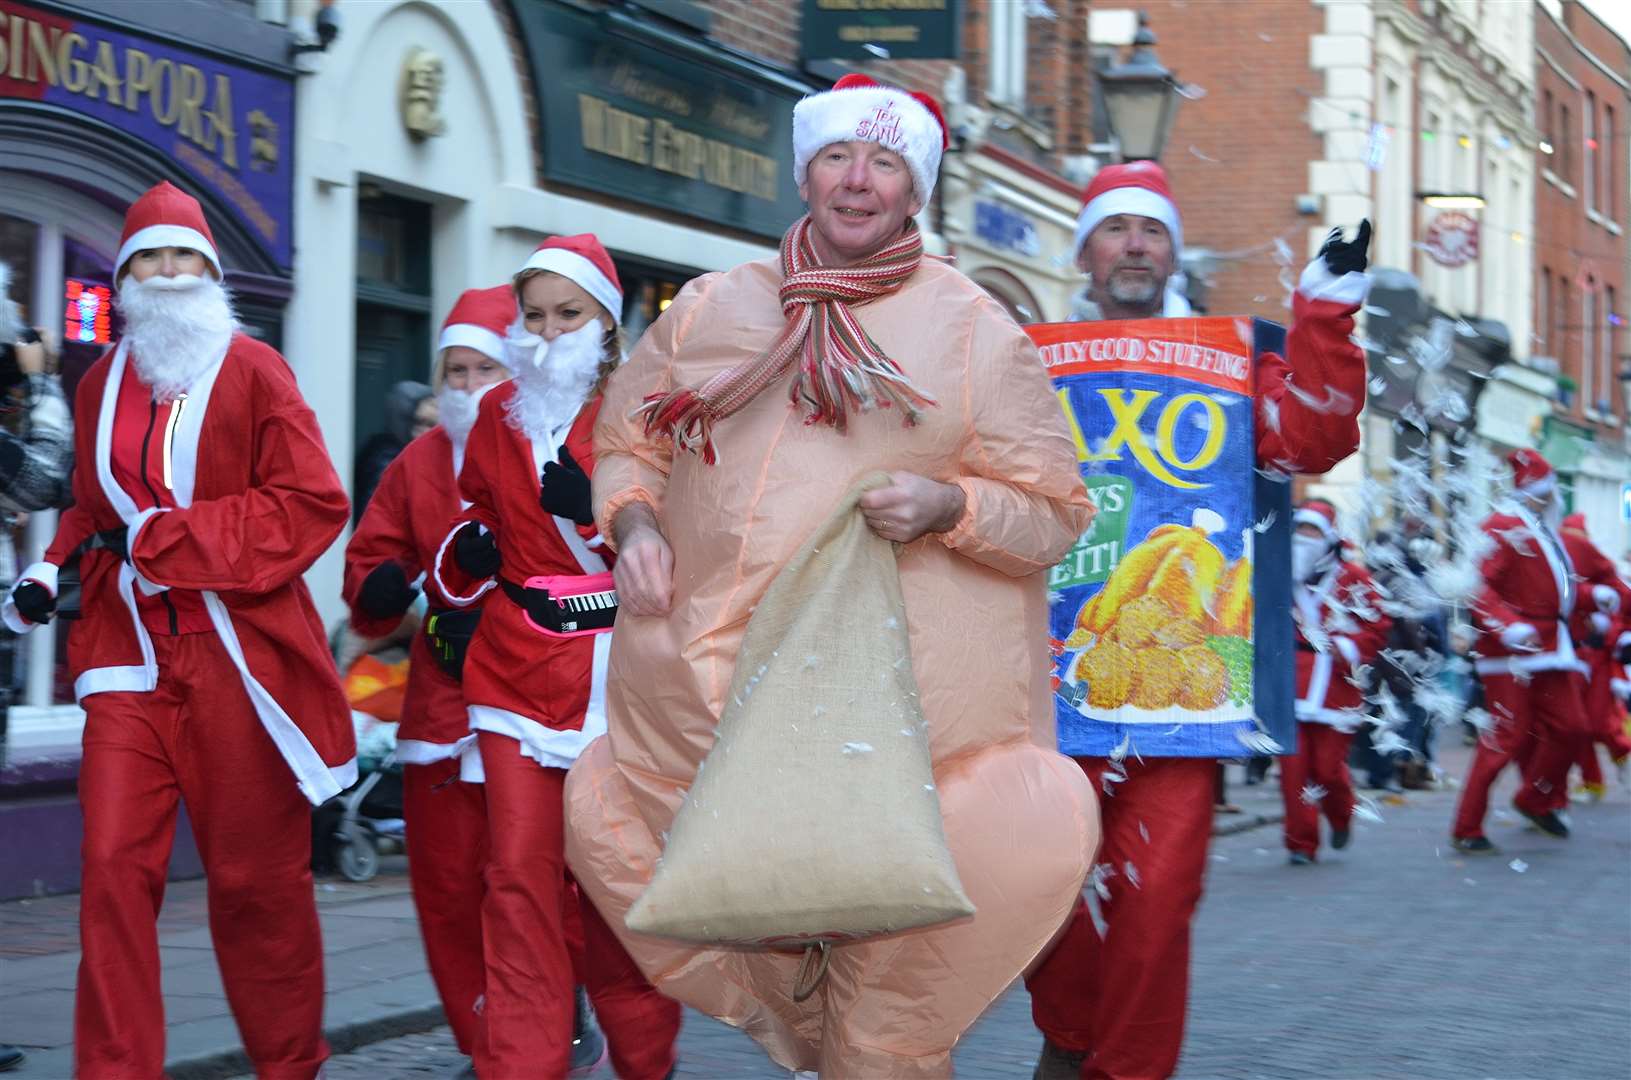 Winging it! A man dressed as a Christmas turkey runs through Rochester during the Santa run [credit: Jason Arthur]